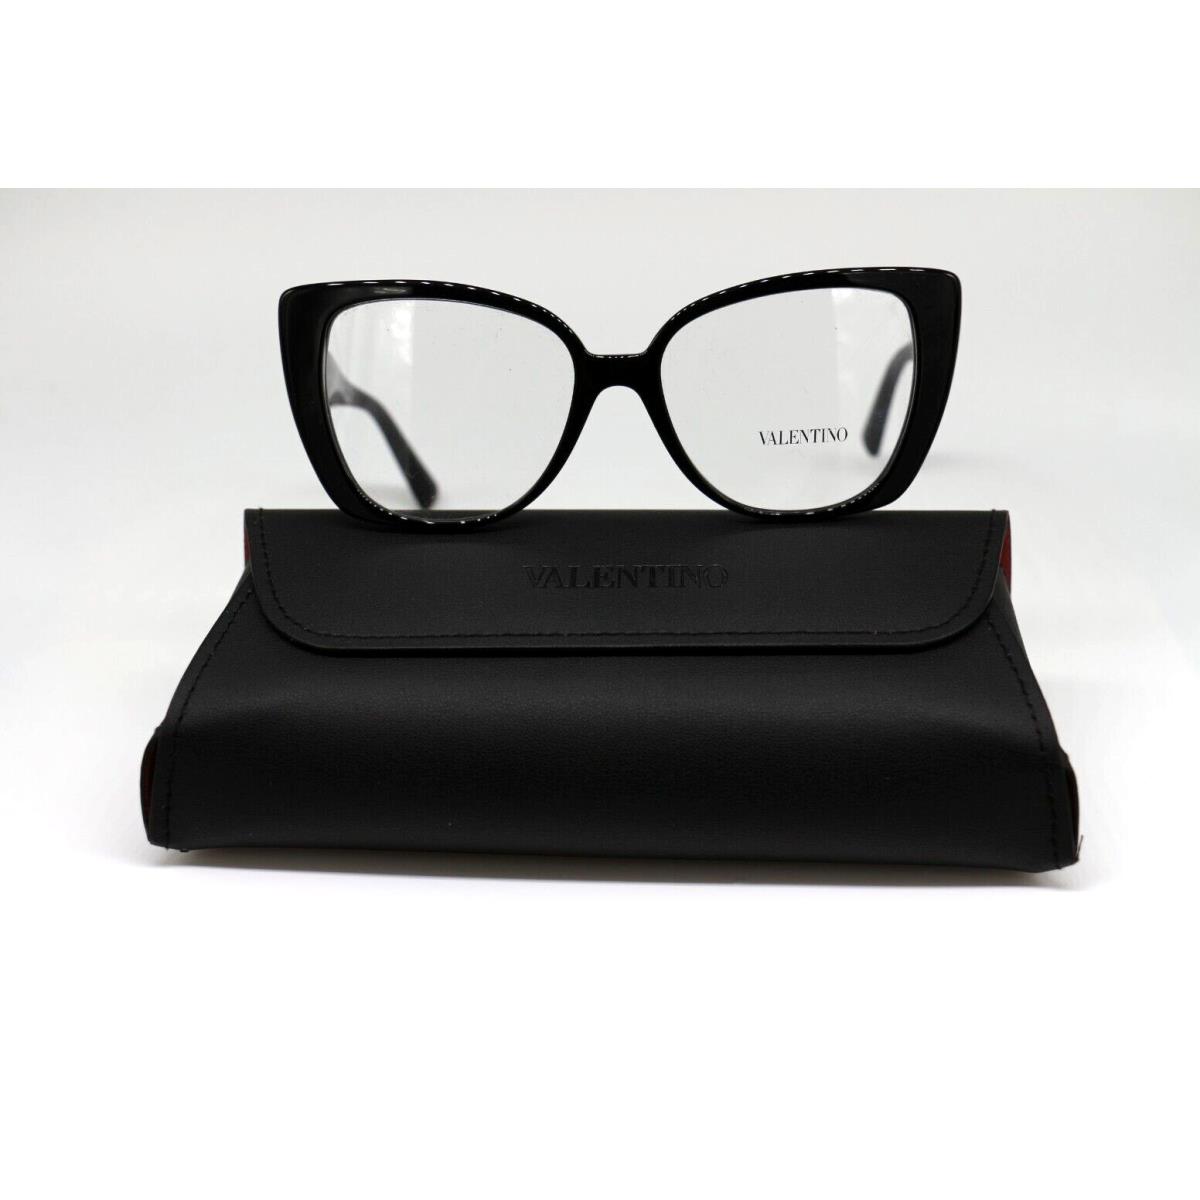 Valentino eyeglasses Giorgio Armani - Black Frame 0